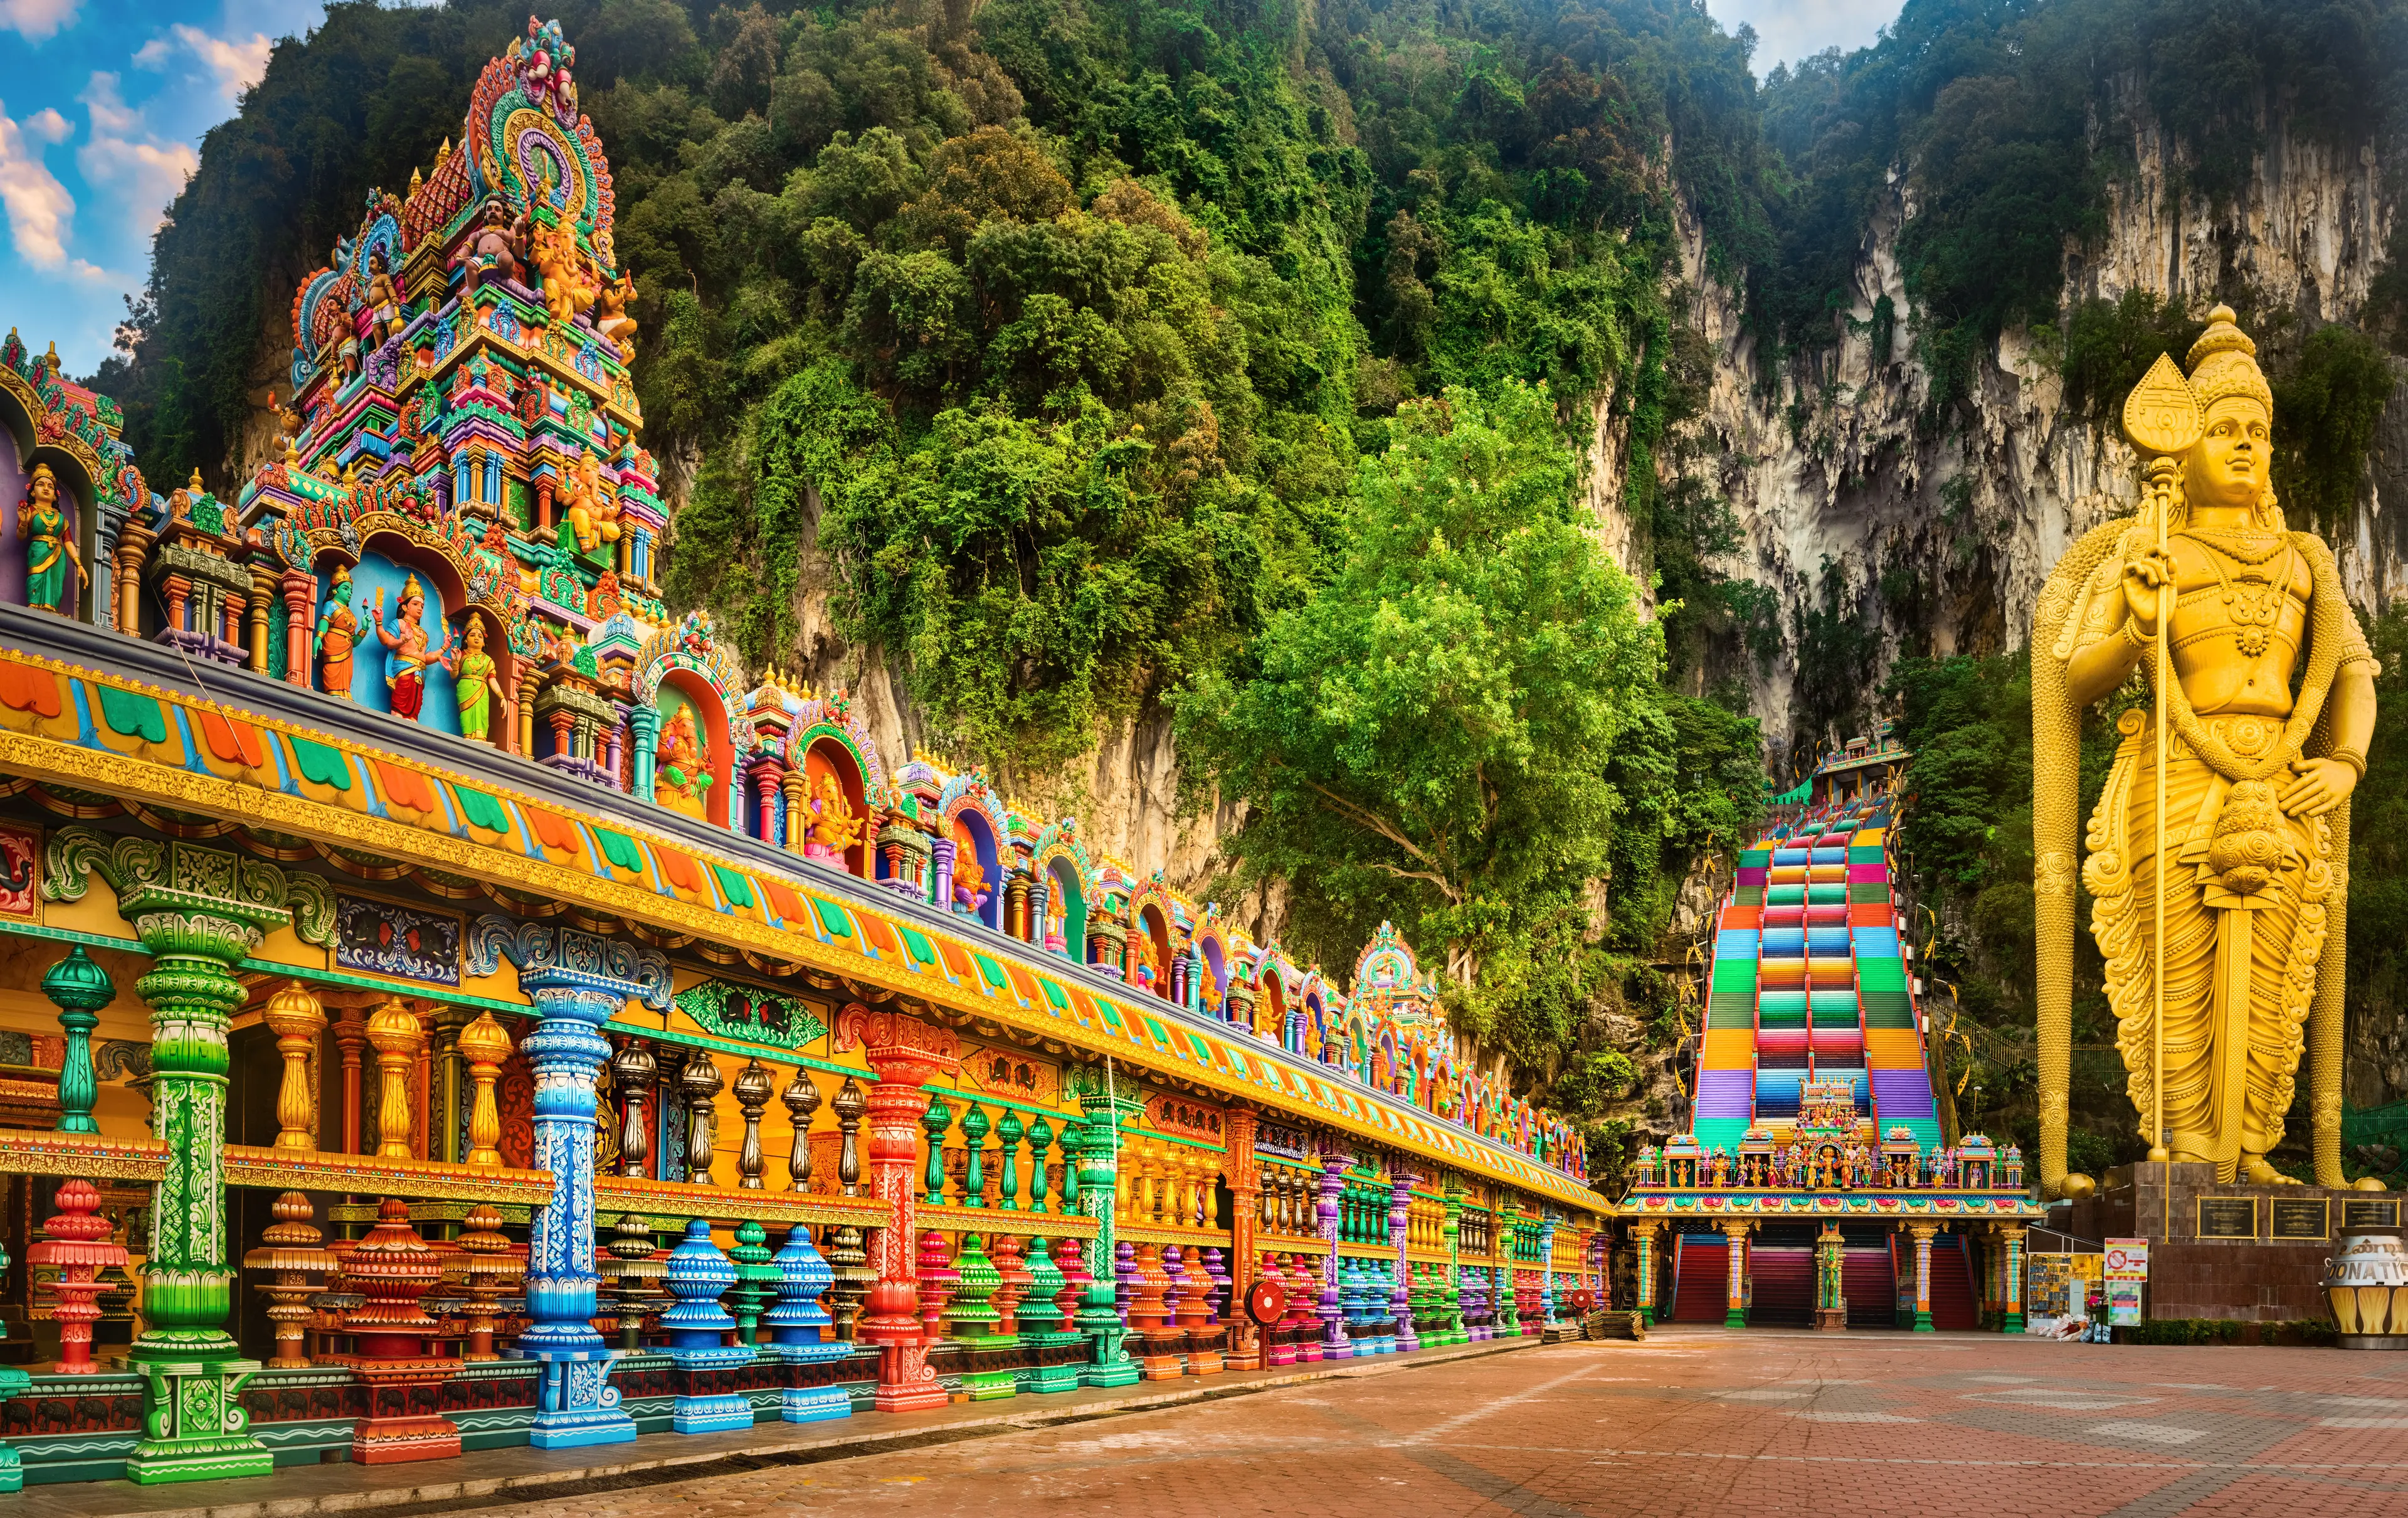 Colorful entrance to Batu caves